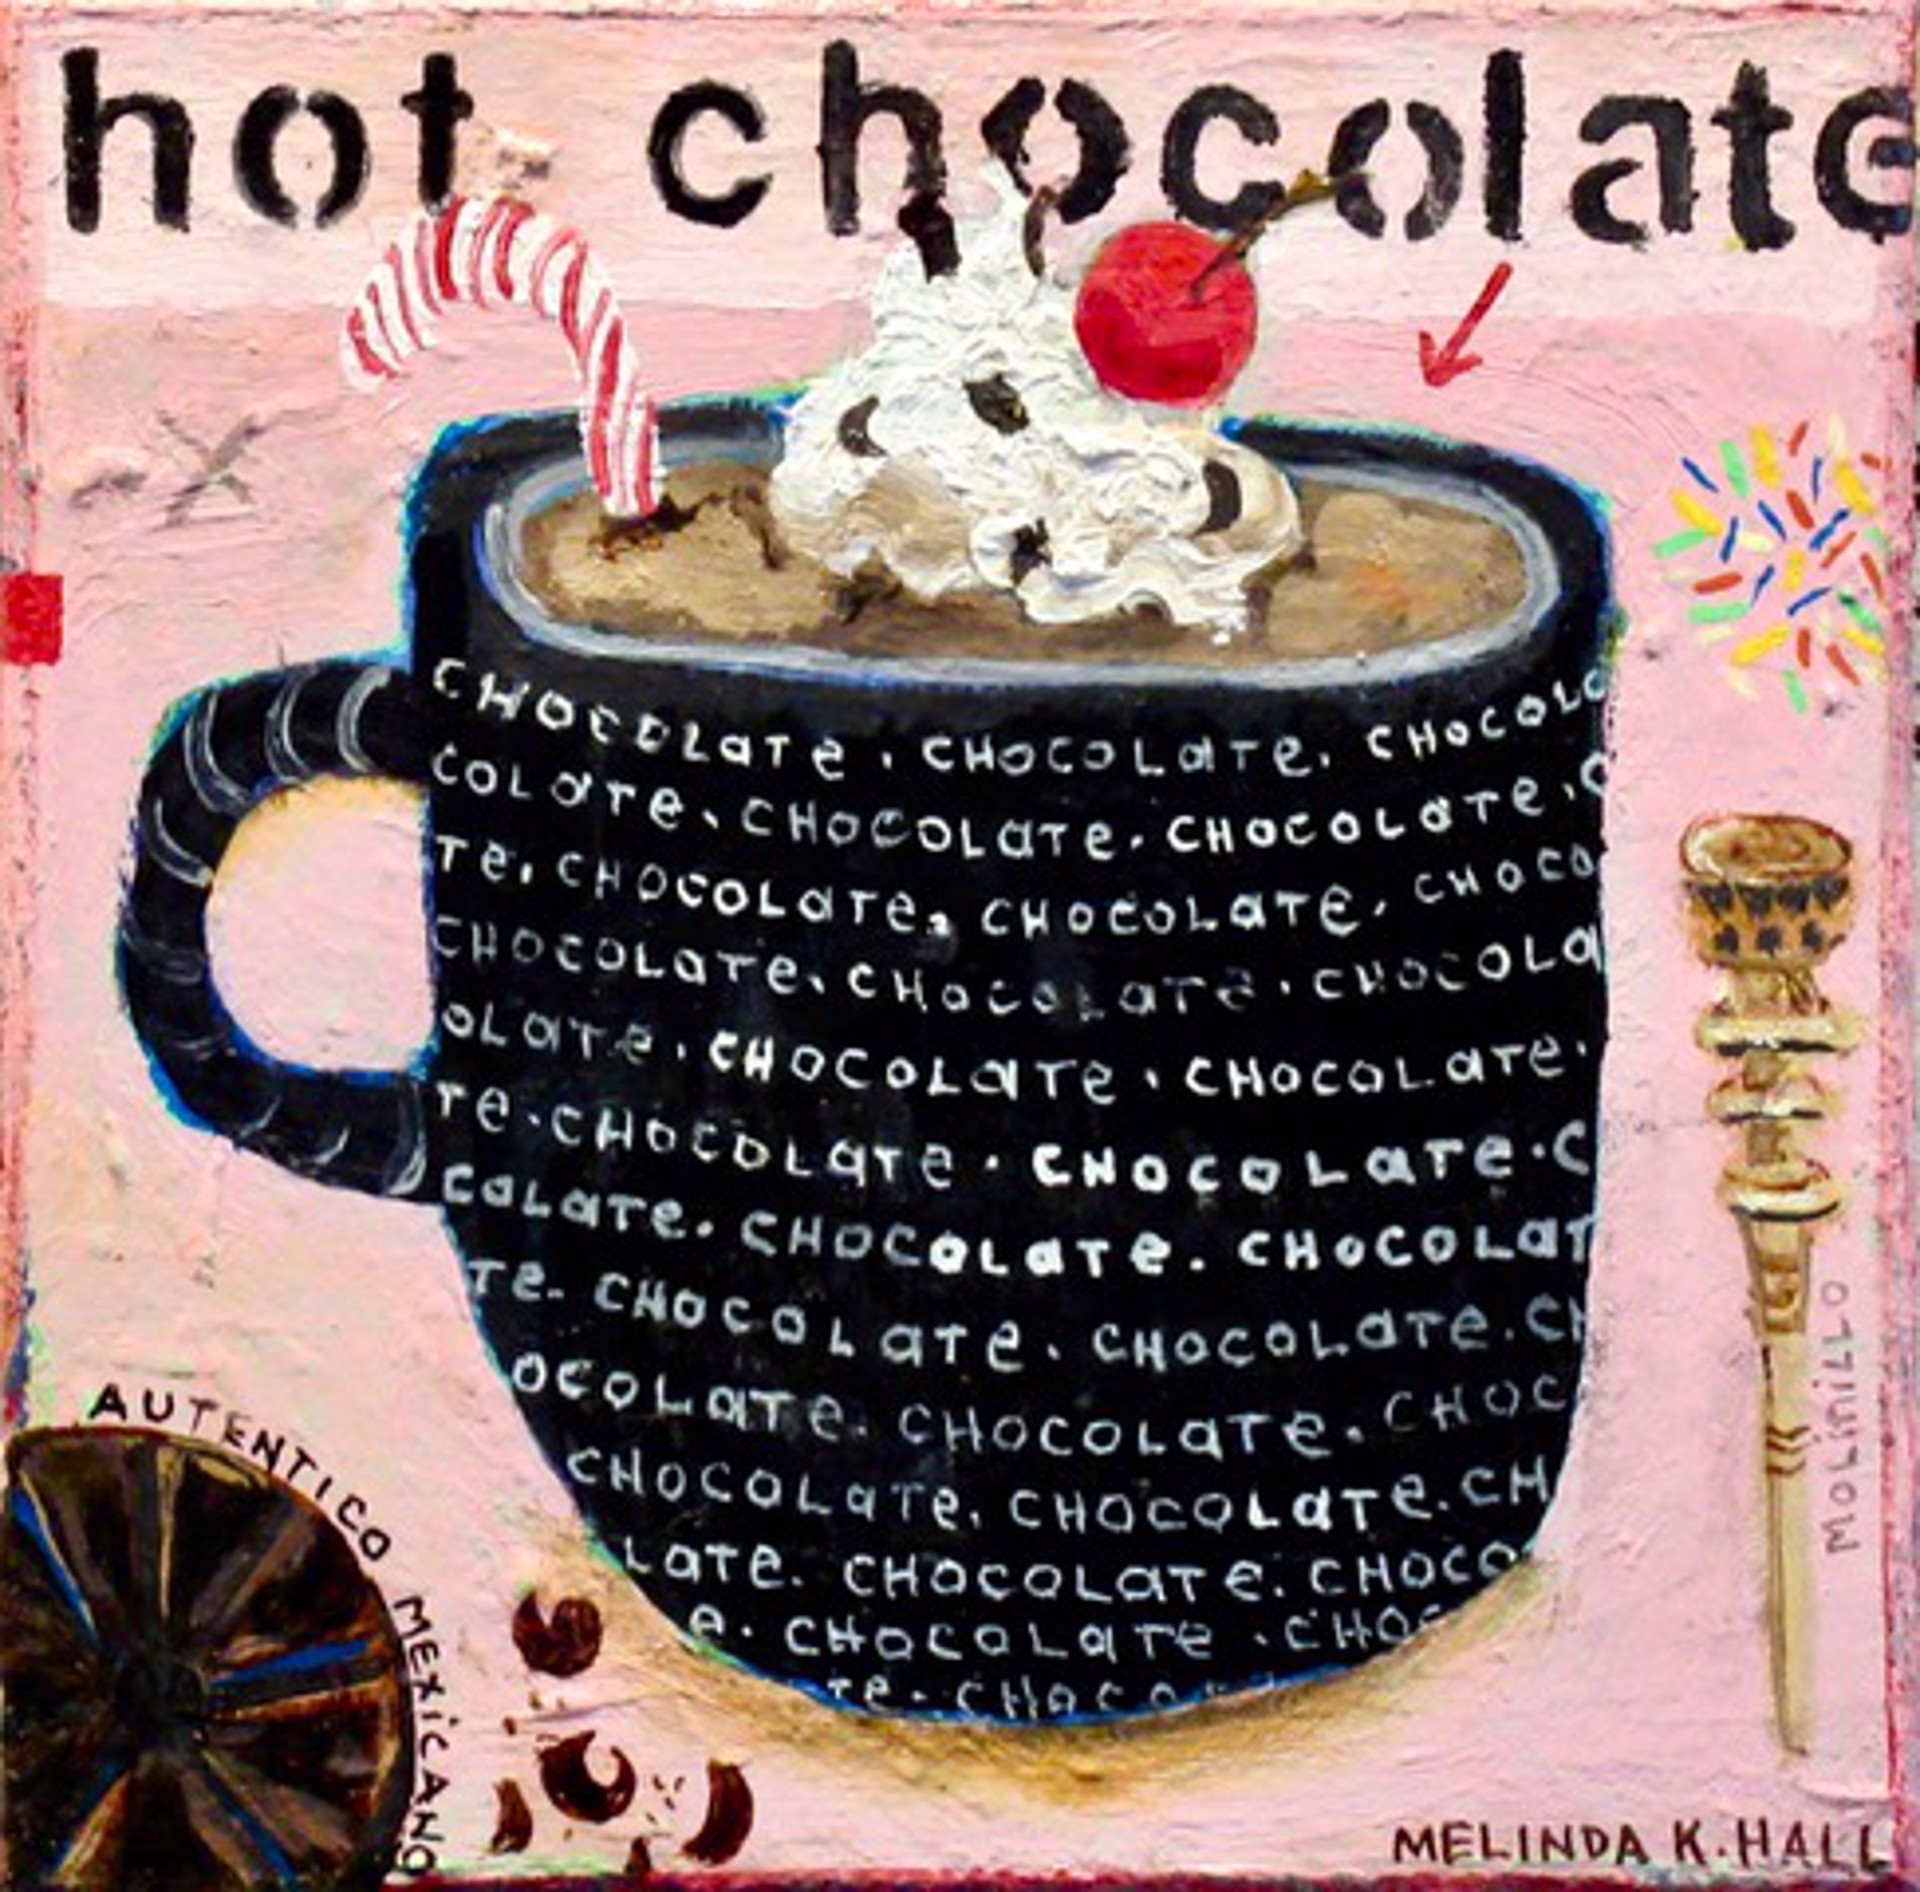 Hot Chocolate with Maraschino by Melinda K. Hall